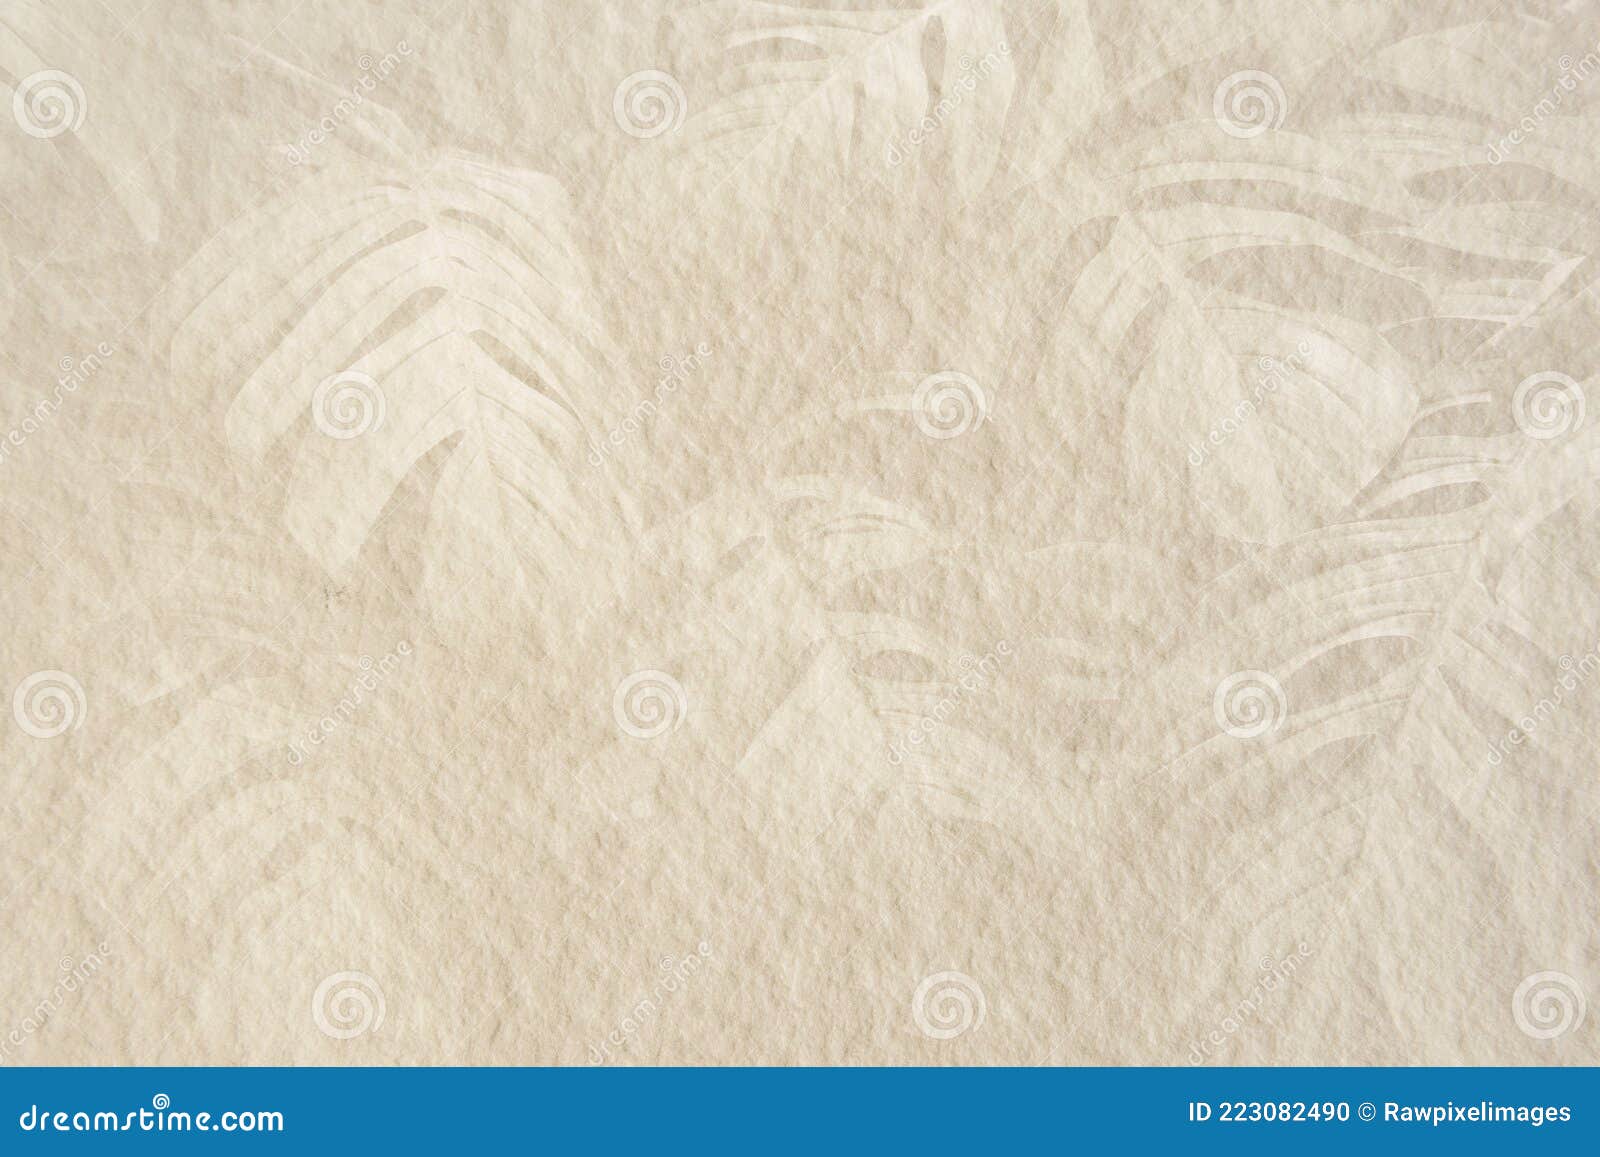 monstera leaf pattern on a beige cement background 